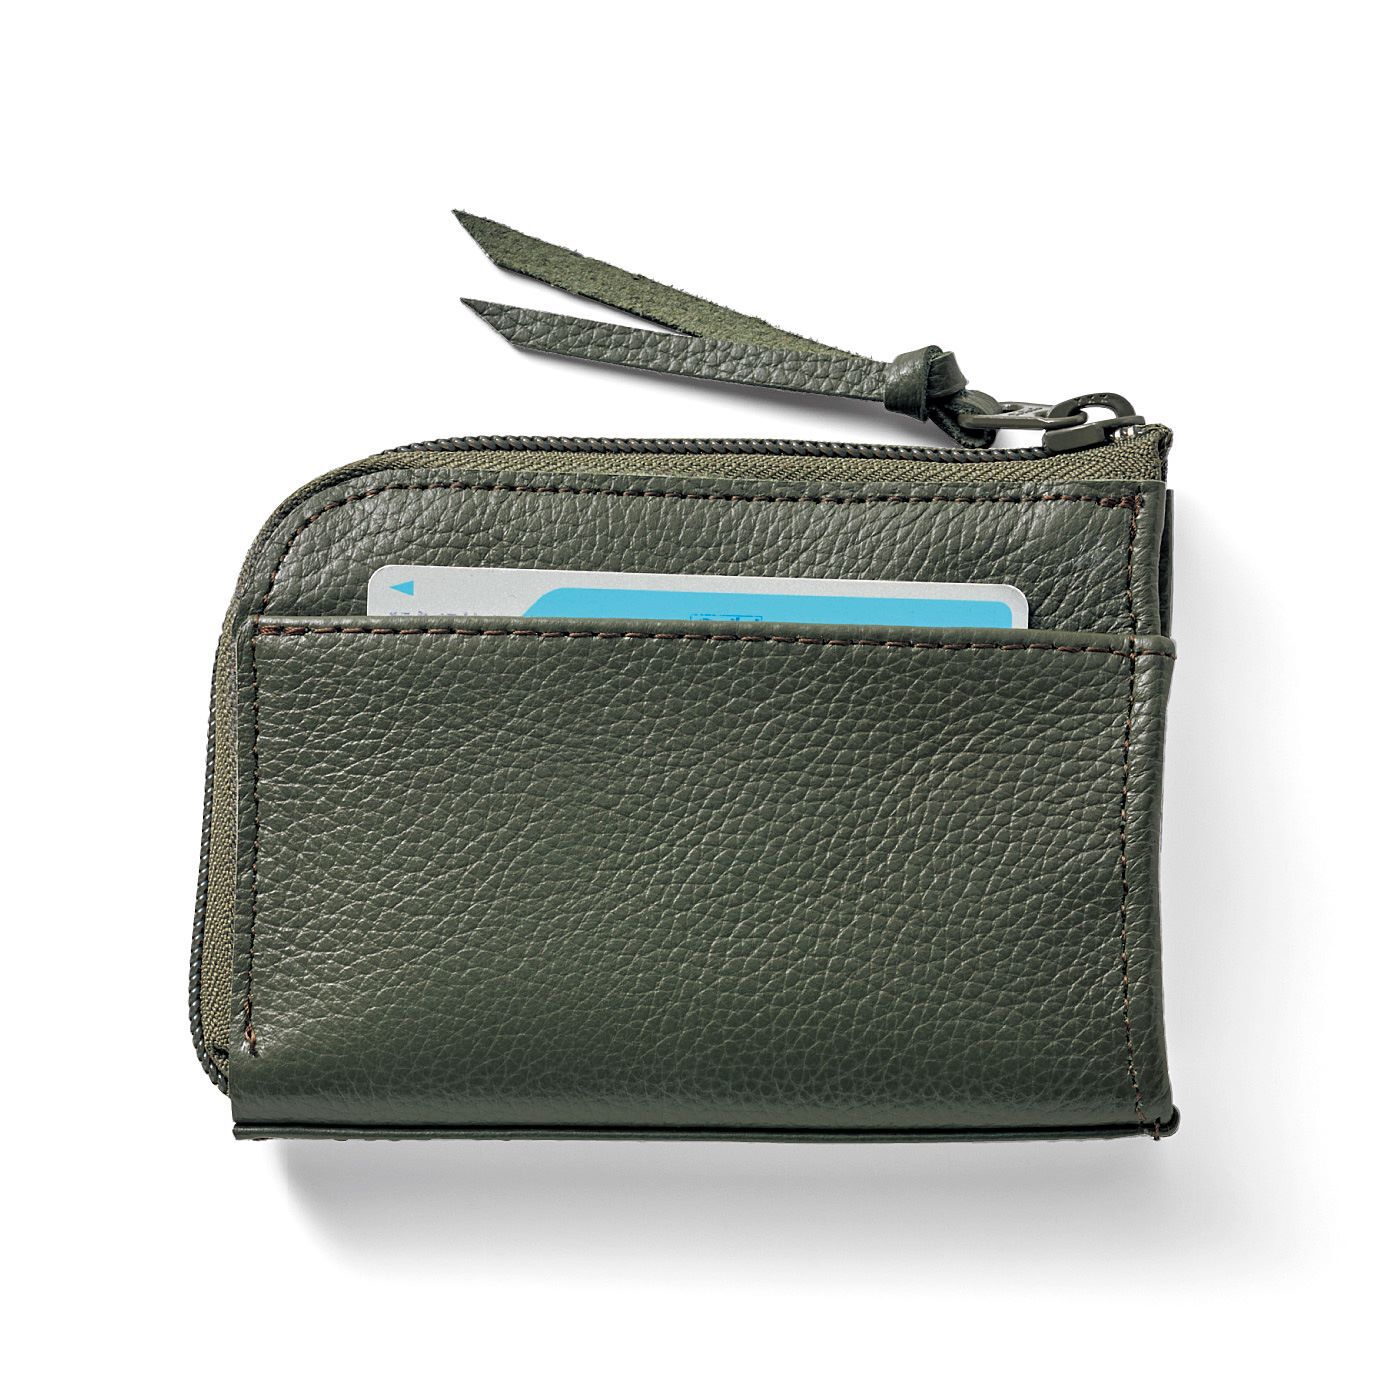 Real Stock|ちょうどいい大きさが手になじむ　本革ミニマム財布〈モスグリーン〉|BACK よく使うカードを入れると便利な背面ポケット付き。